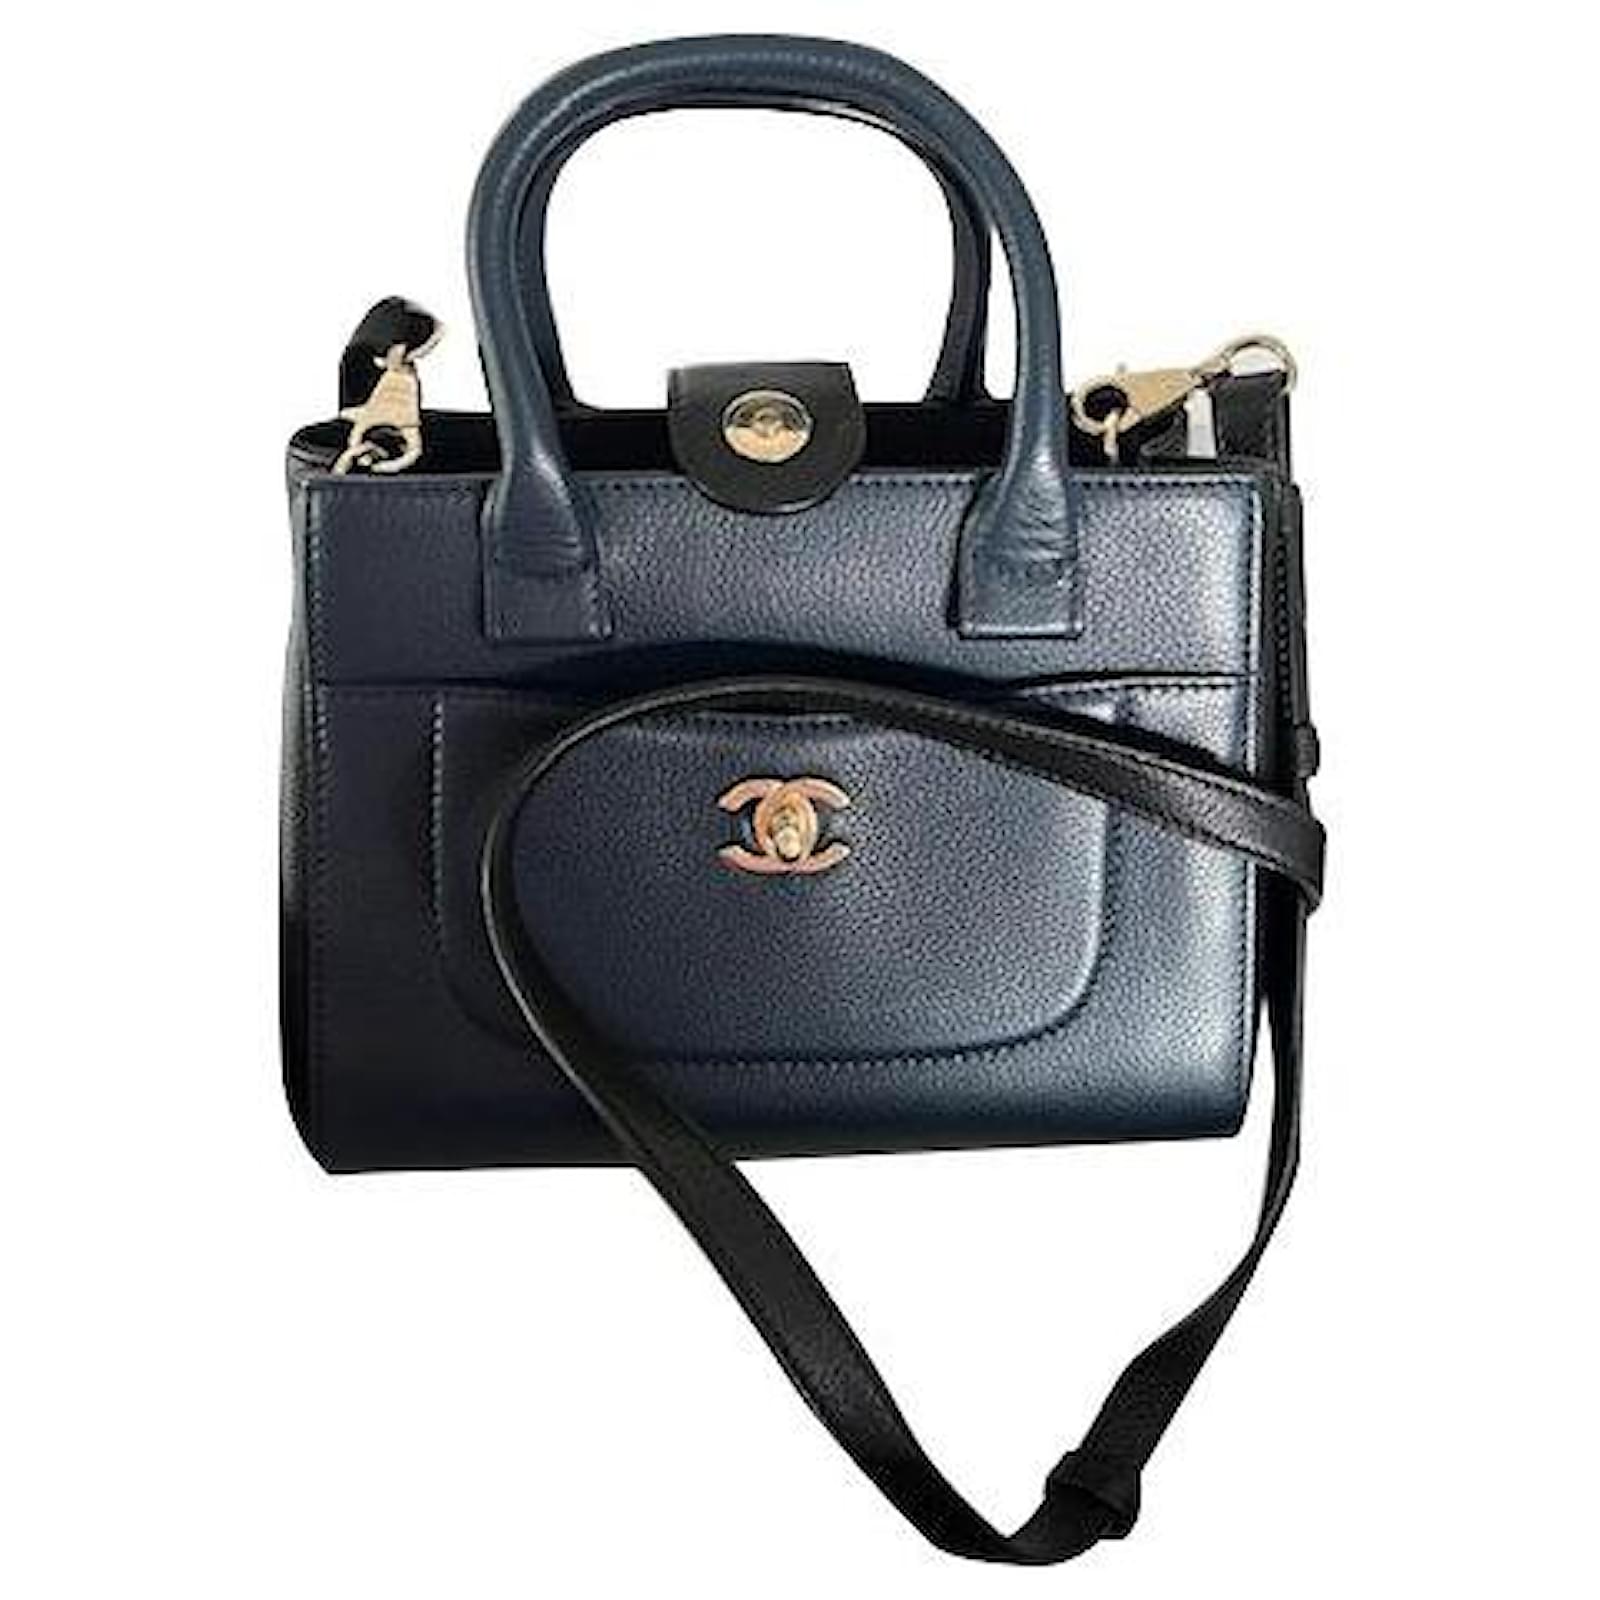 Handbags Chanel Chanel Neo Executive